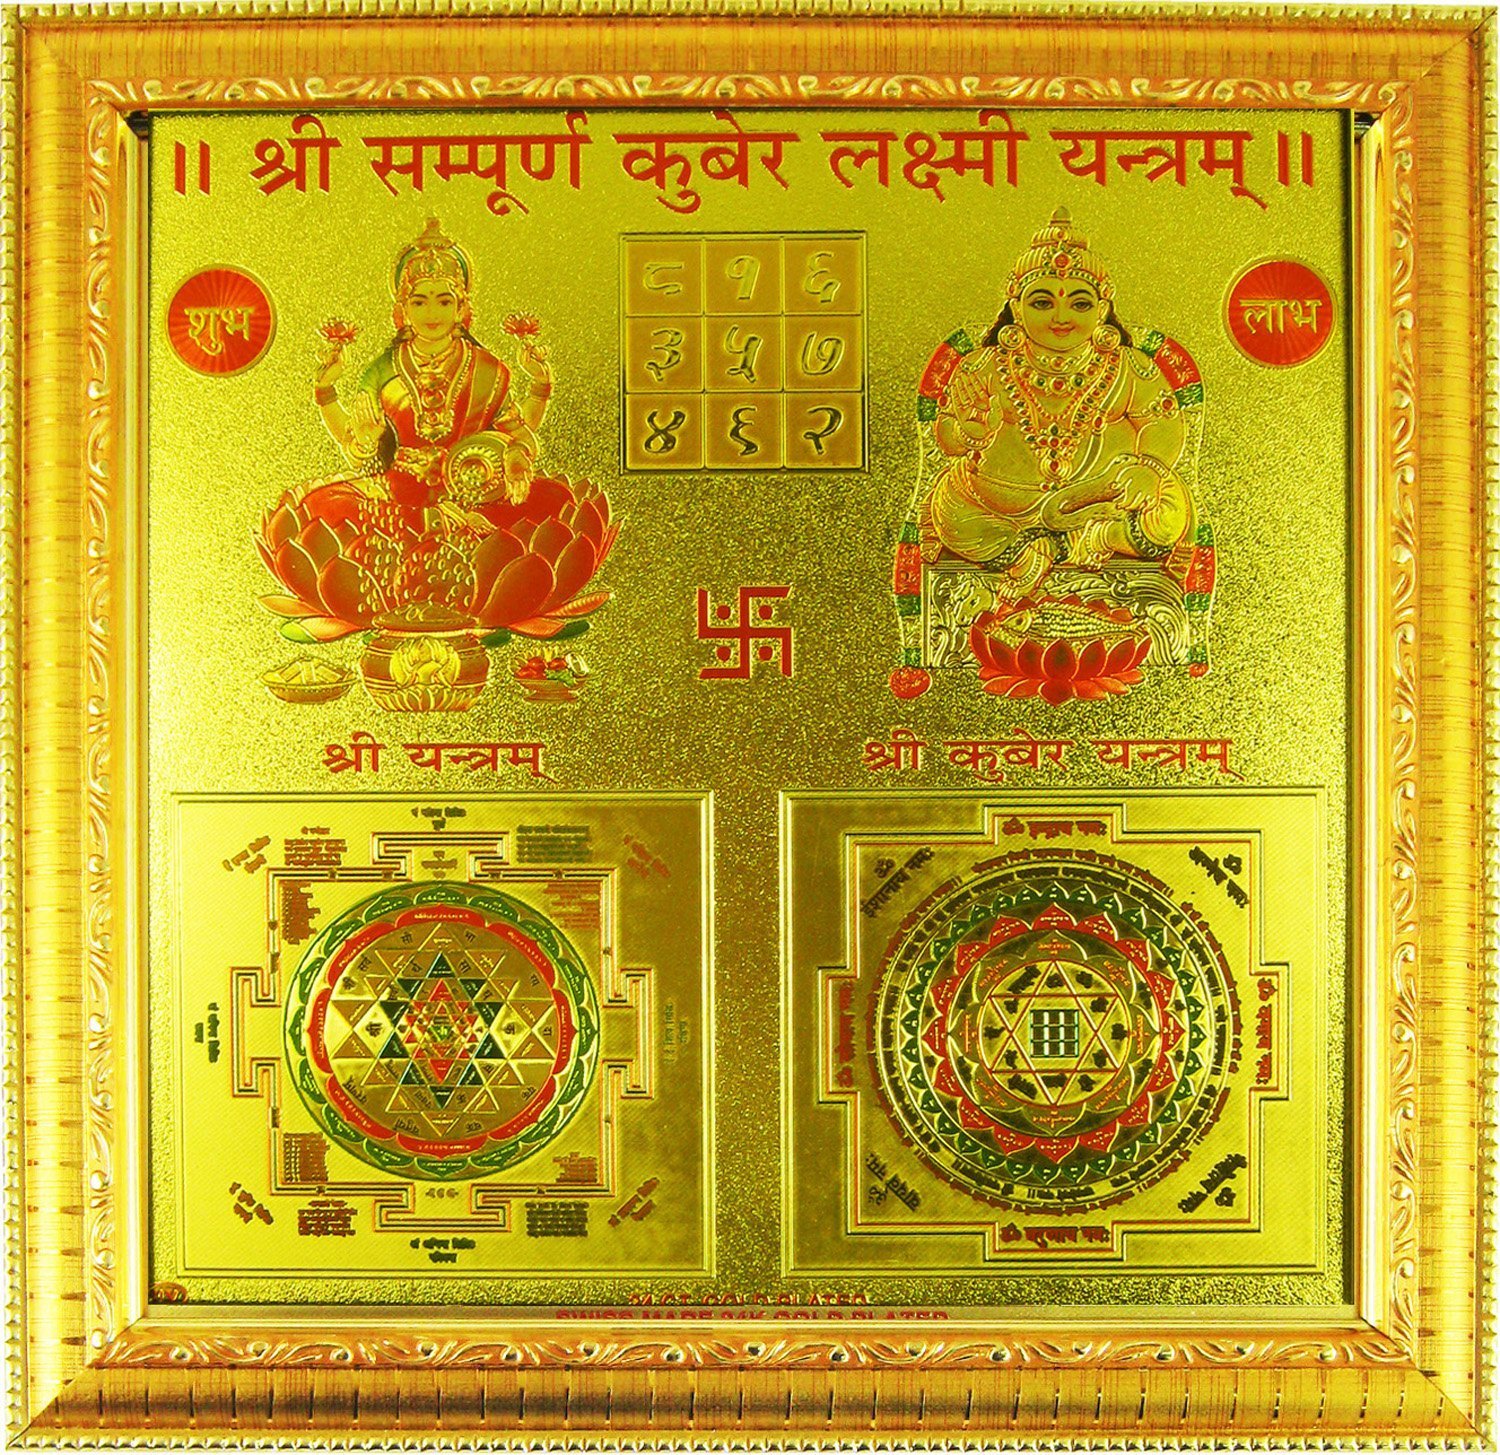 Sri yantra mantra